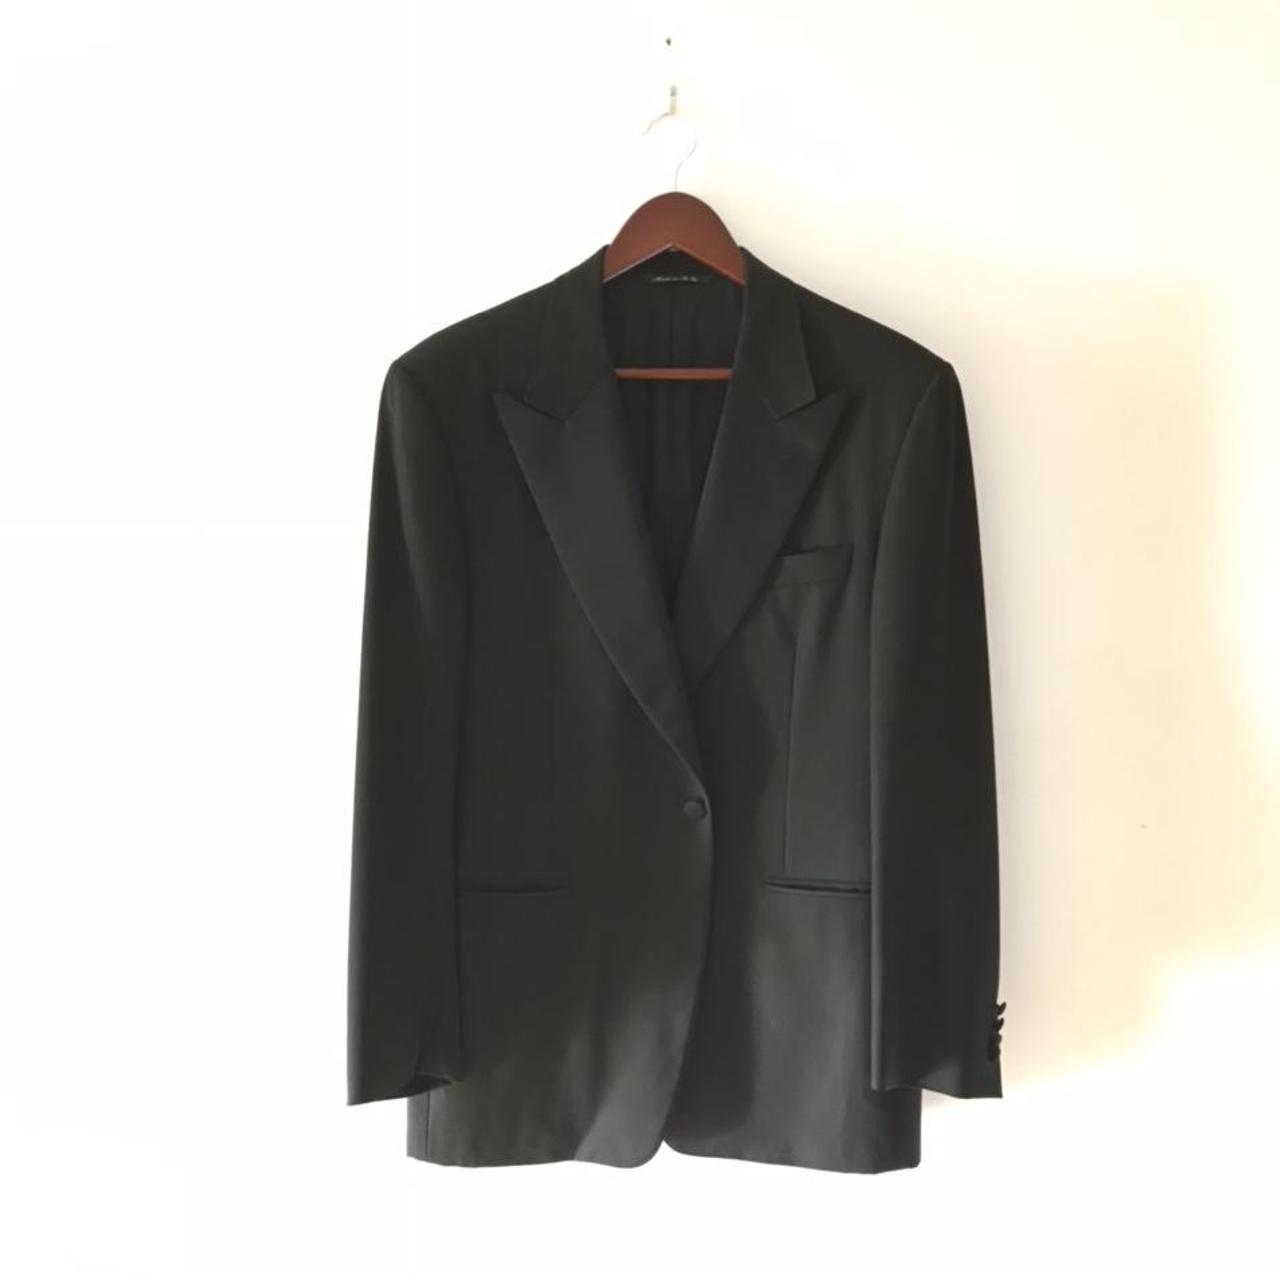 Canali peak-lapel tuxedo jacket. Made in Italy, this... - Depop